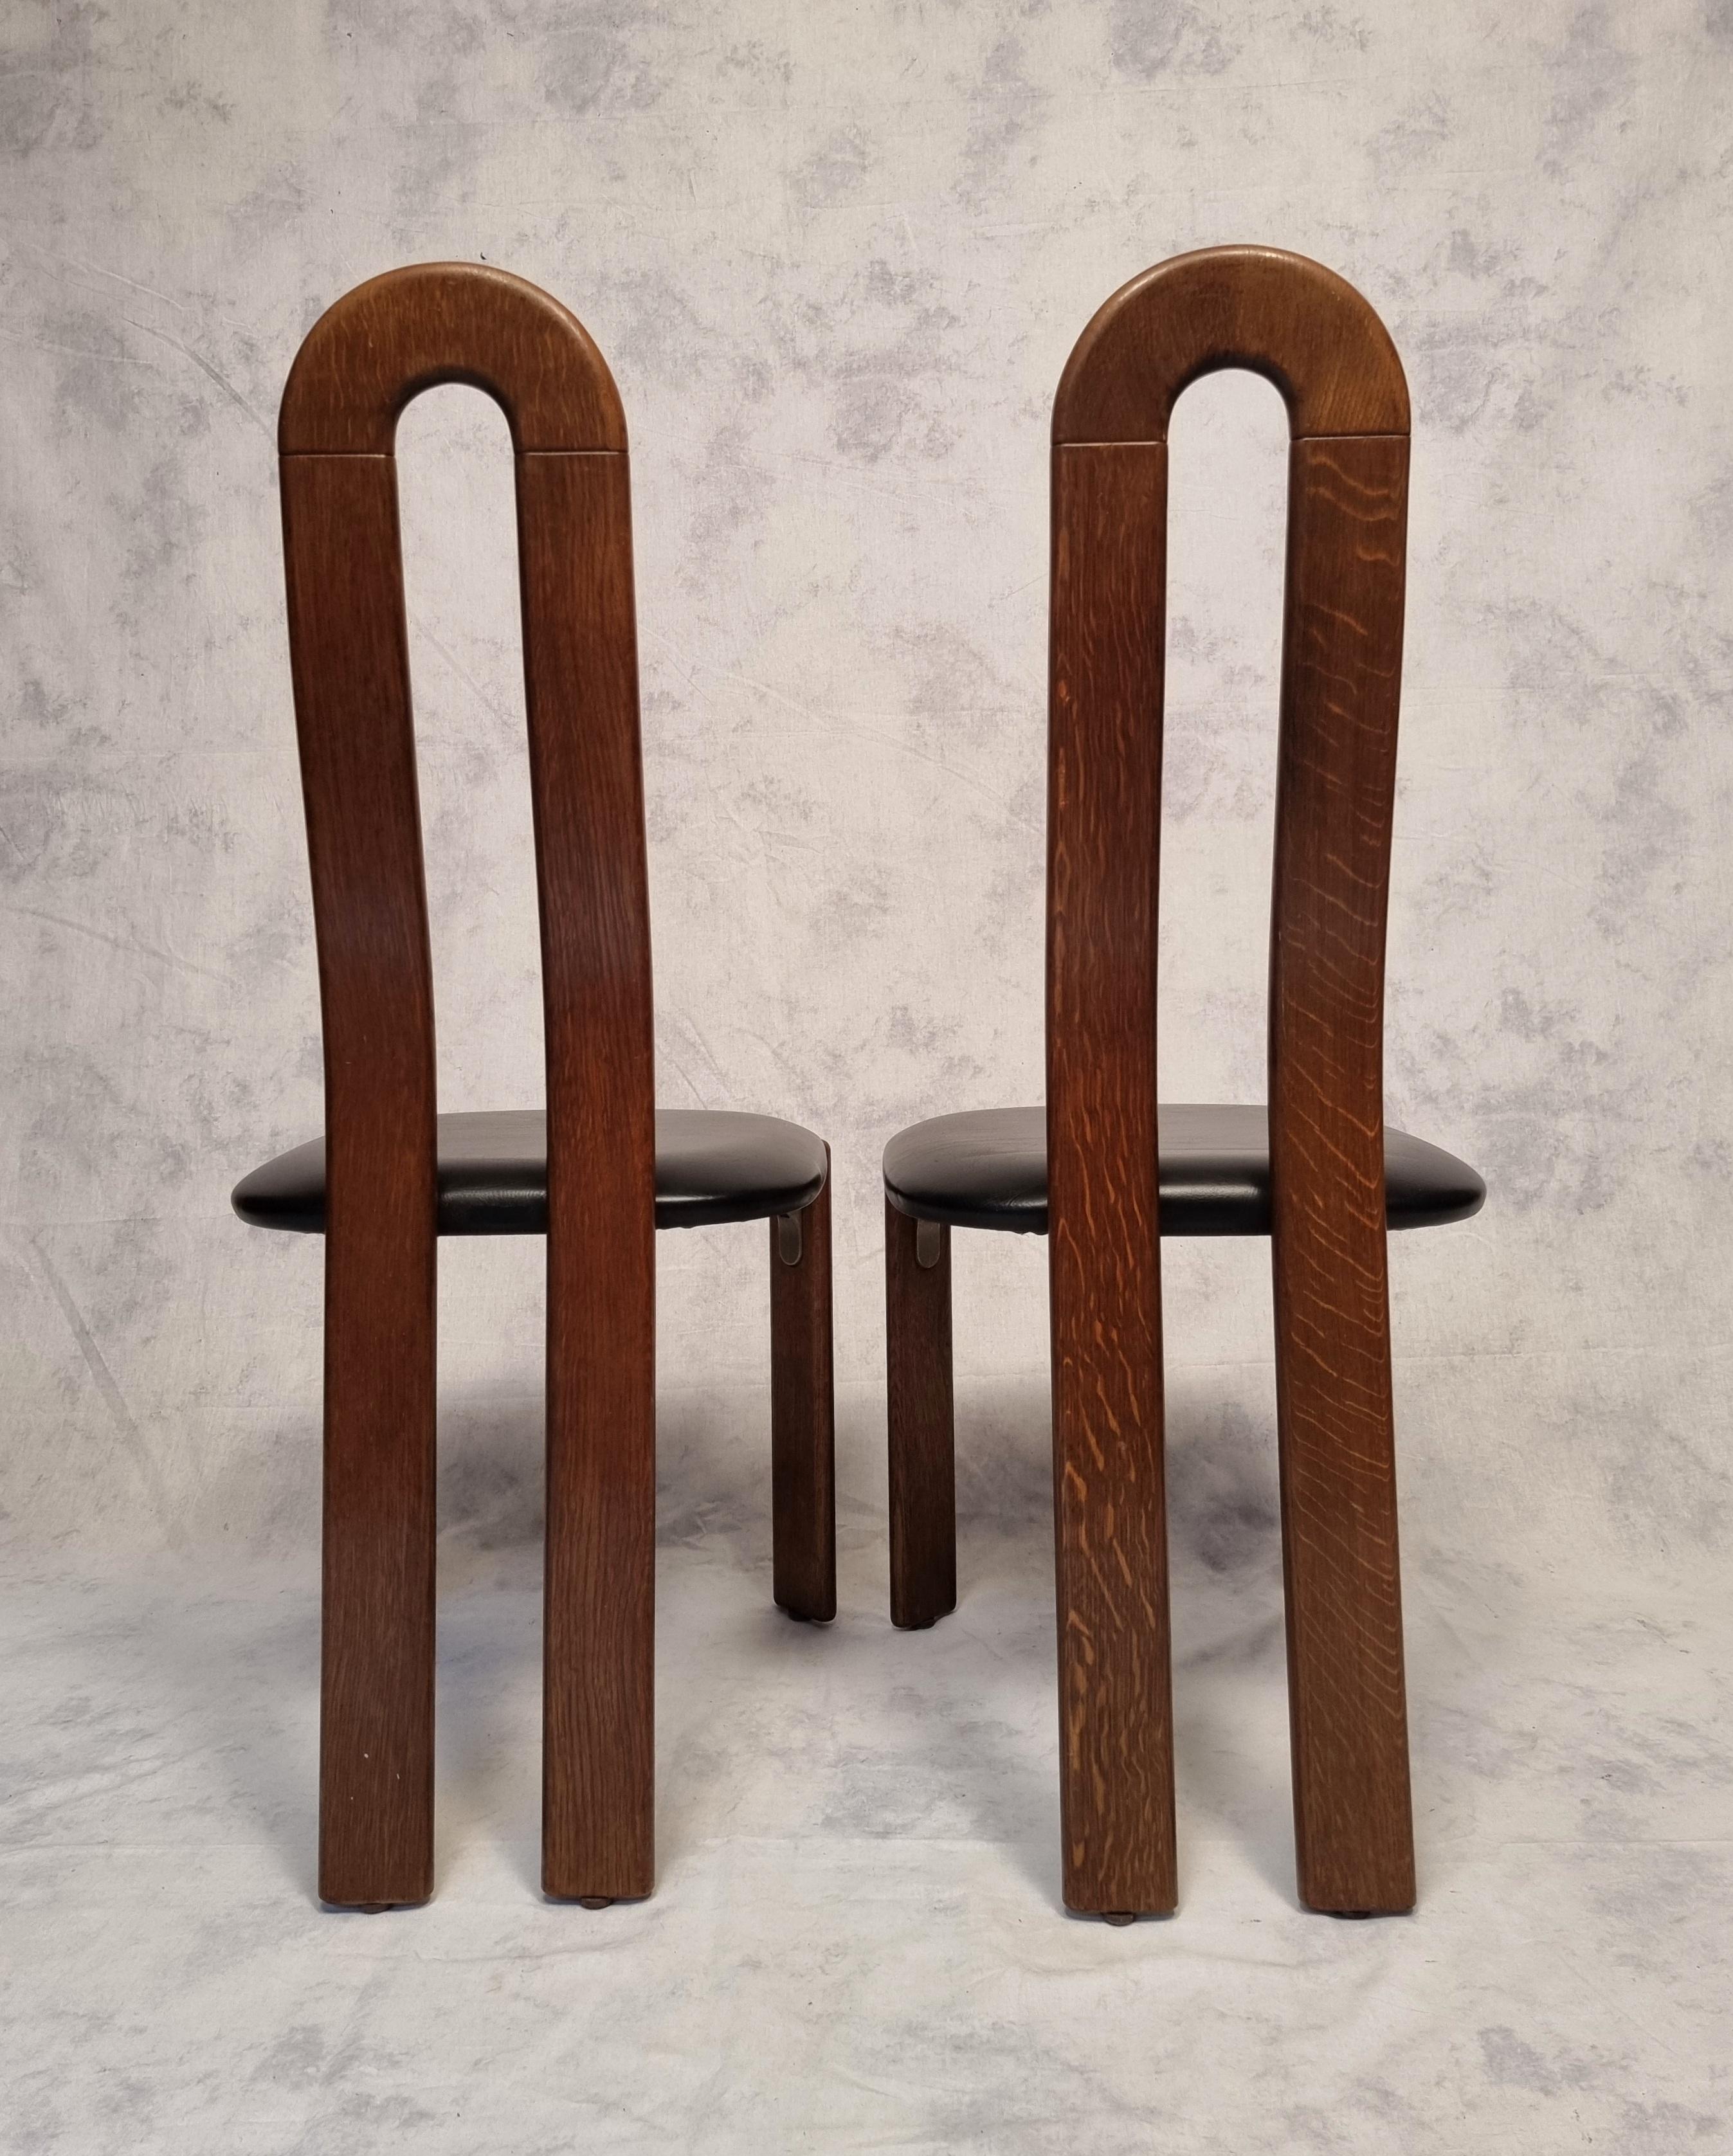 Swiss Bruno Rey Chairs for Dietiker by Atelier Stuhl Aus Stein Am Rhein, Oak, Ca 1970 For Sale